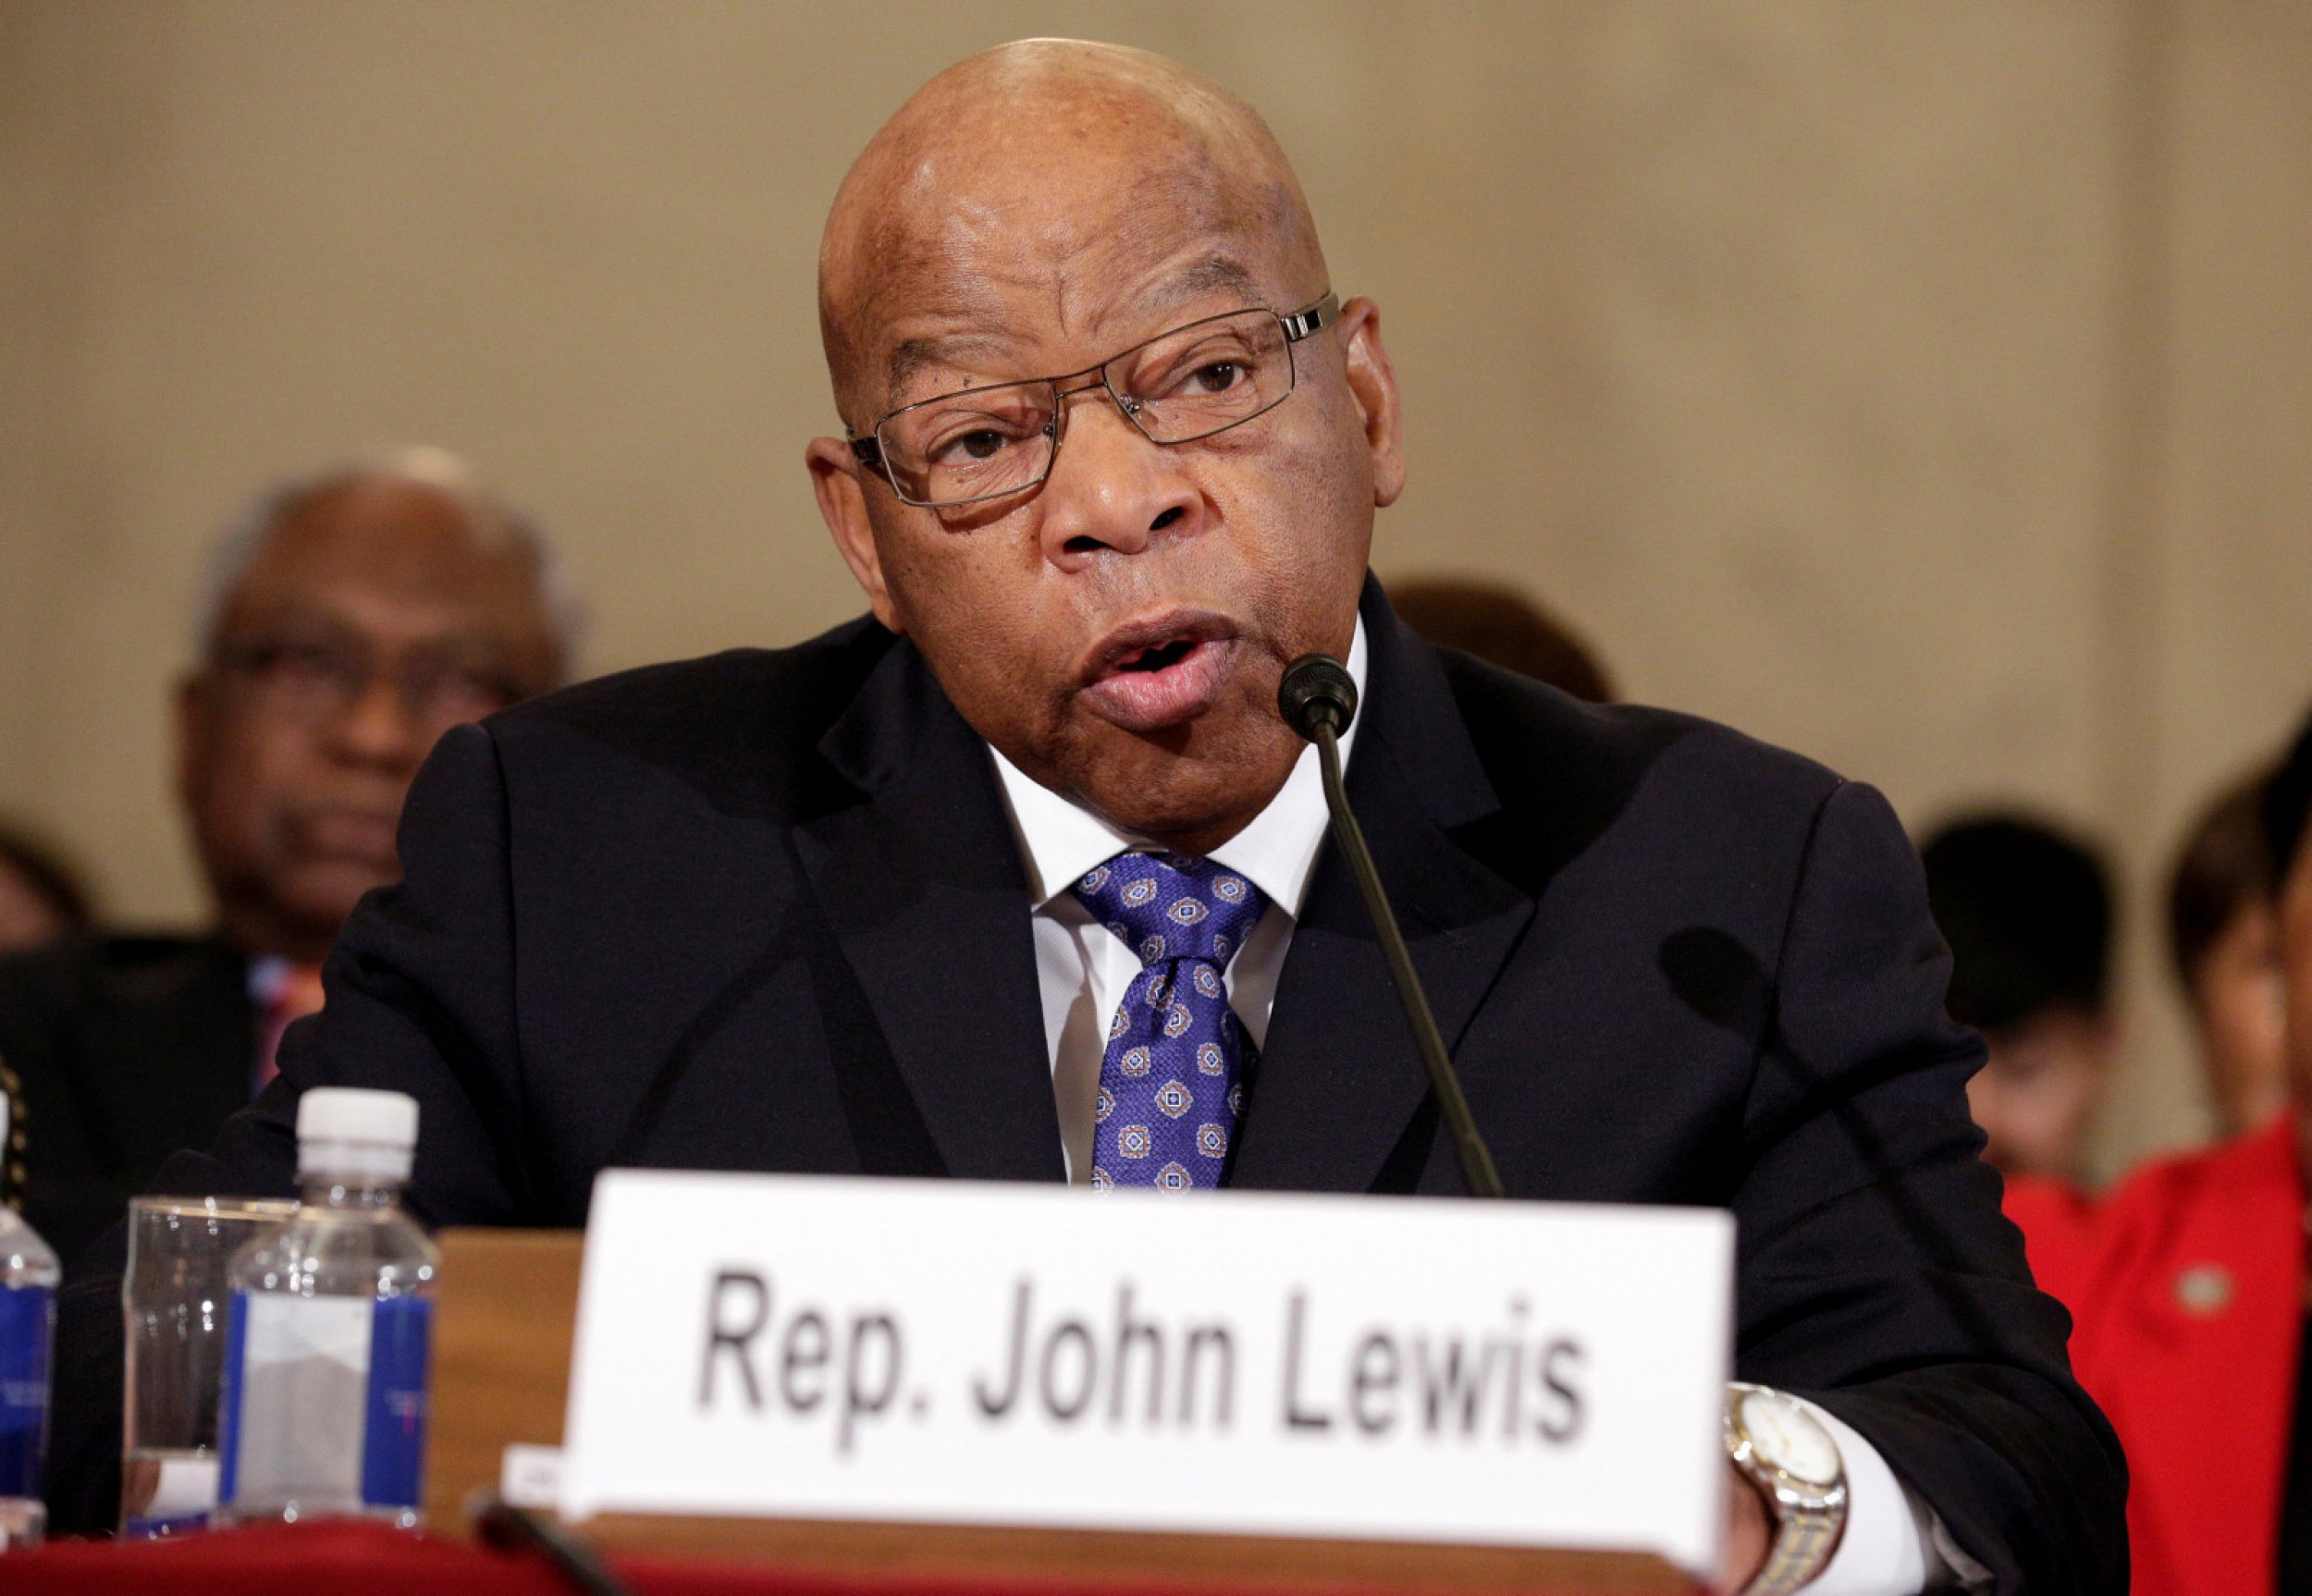 Congressman John Lewiss Testimony Against Jeff Sessions